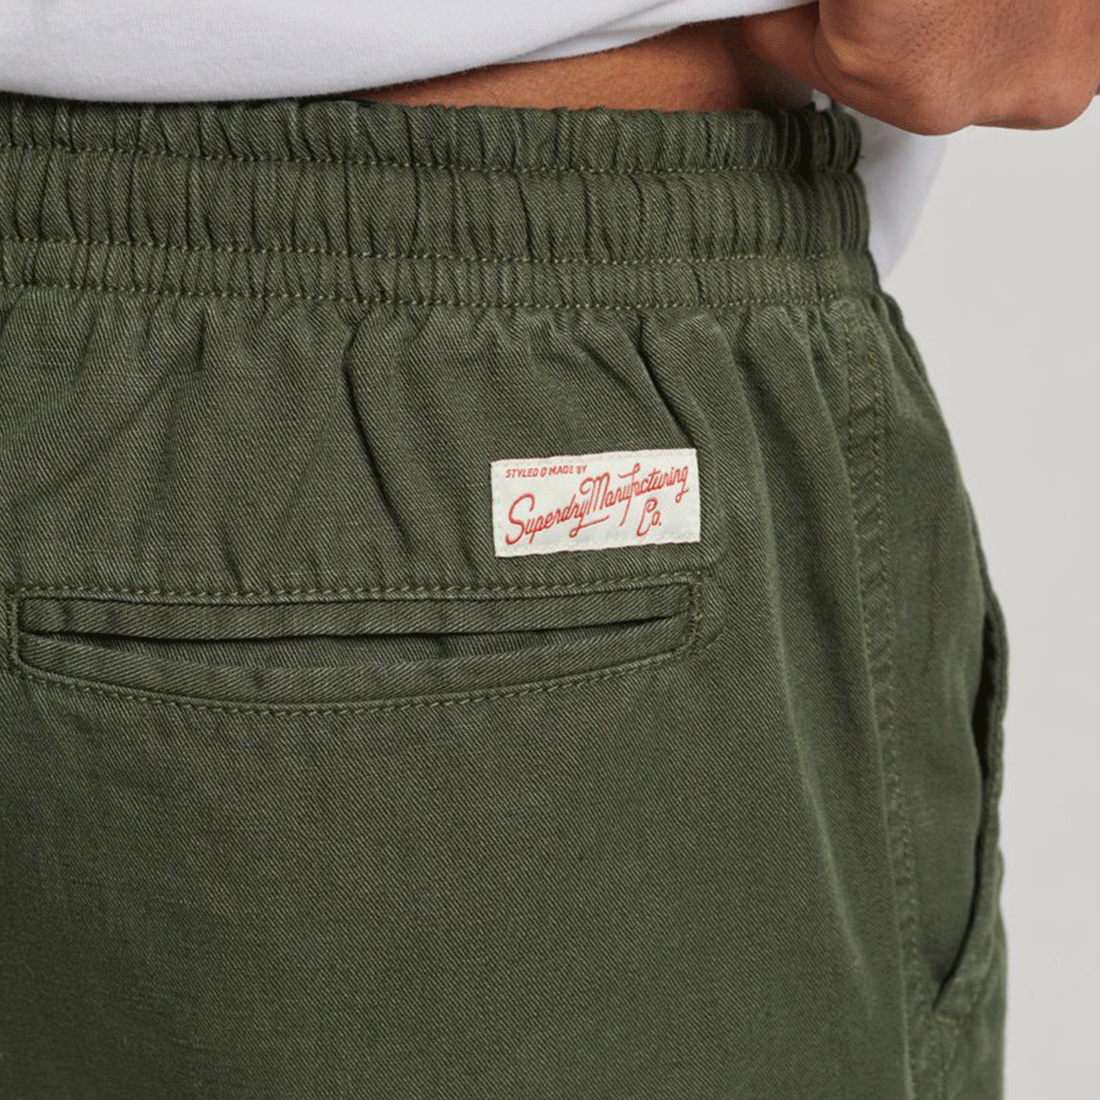 Pantaloncini Superdry - Vintage Overdyed Shorts-Verde